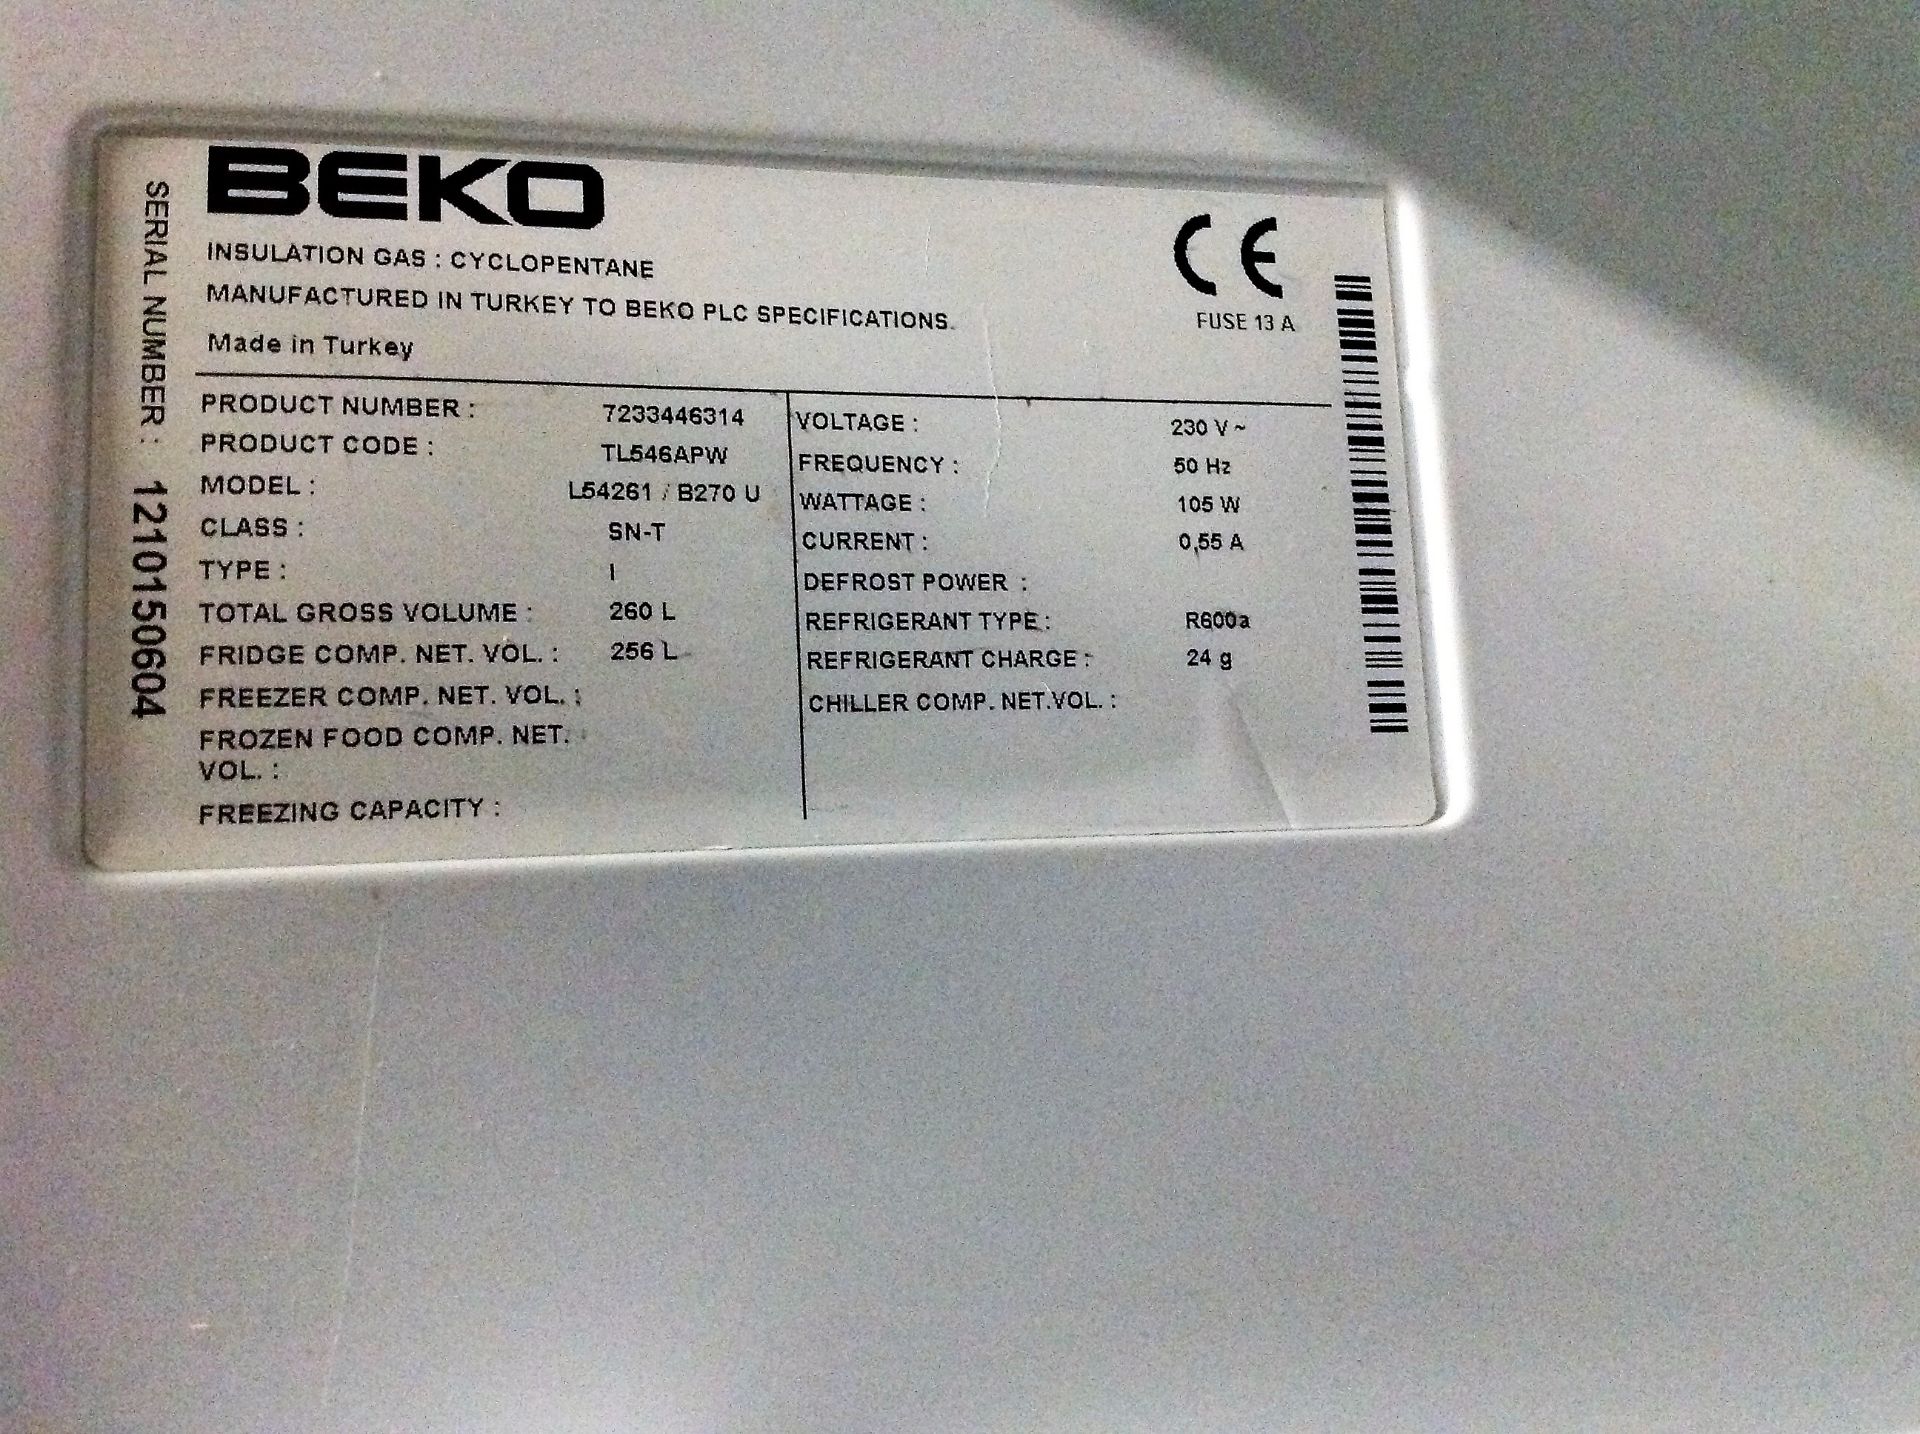 Beko Domestic White Refrigerator -Model: L54261 / B270U - H: 145cm W: 55cm D: 54cm - Image 3 of 3